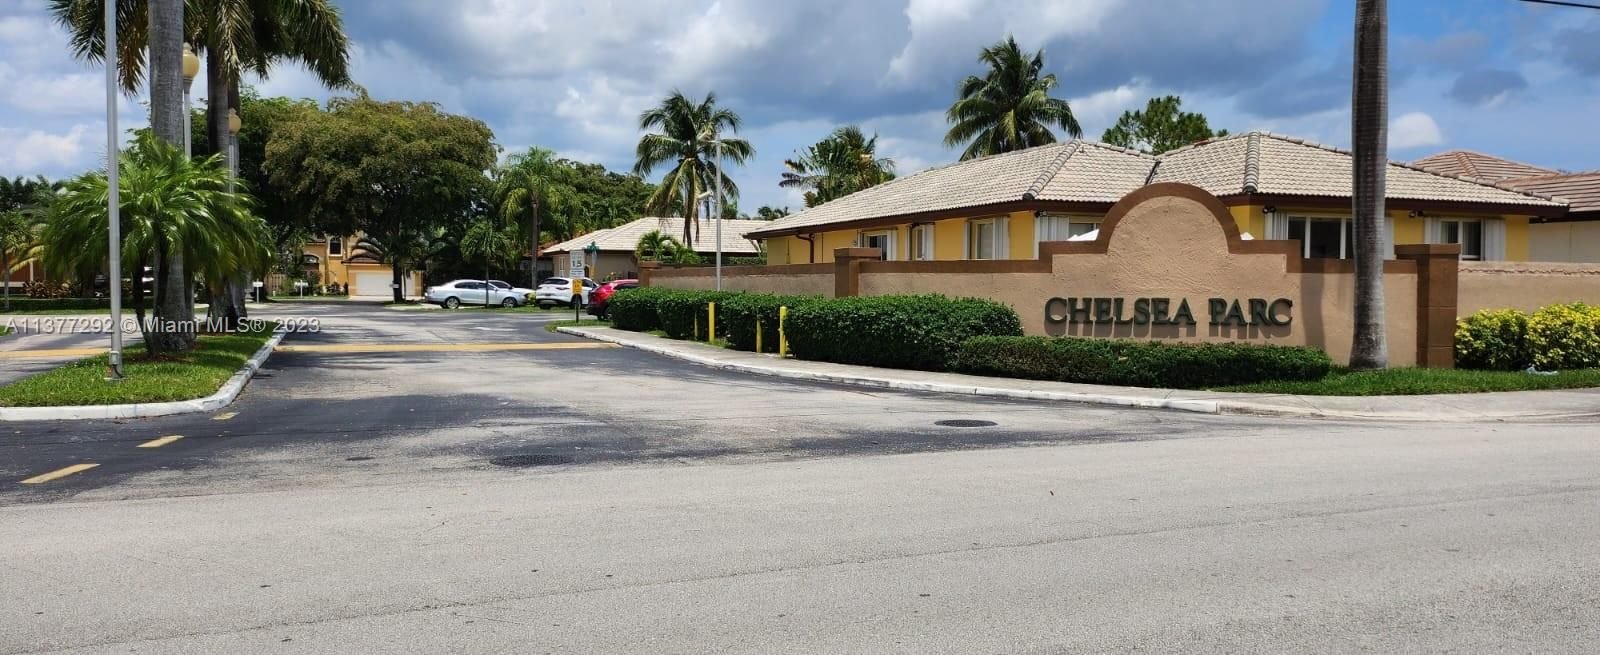 Real estate property located at 16139 68th Ter, Miami-Dade County, Miami, FL